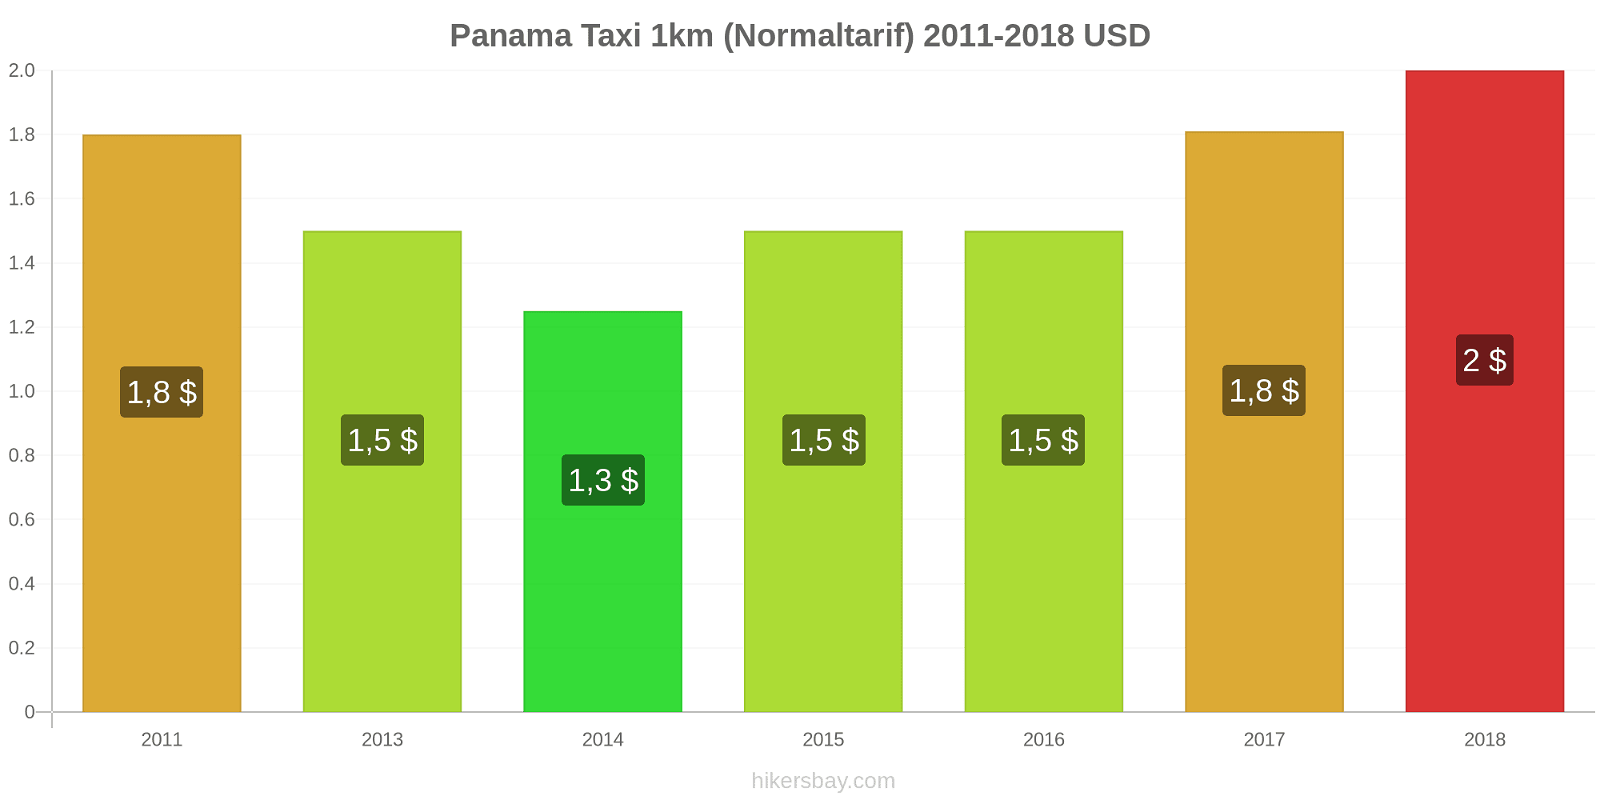 Panama Preisänderungen Taxi 1km (Normaltarif) hikersbay.com